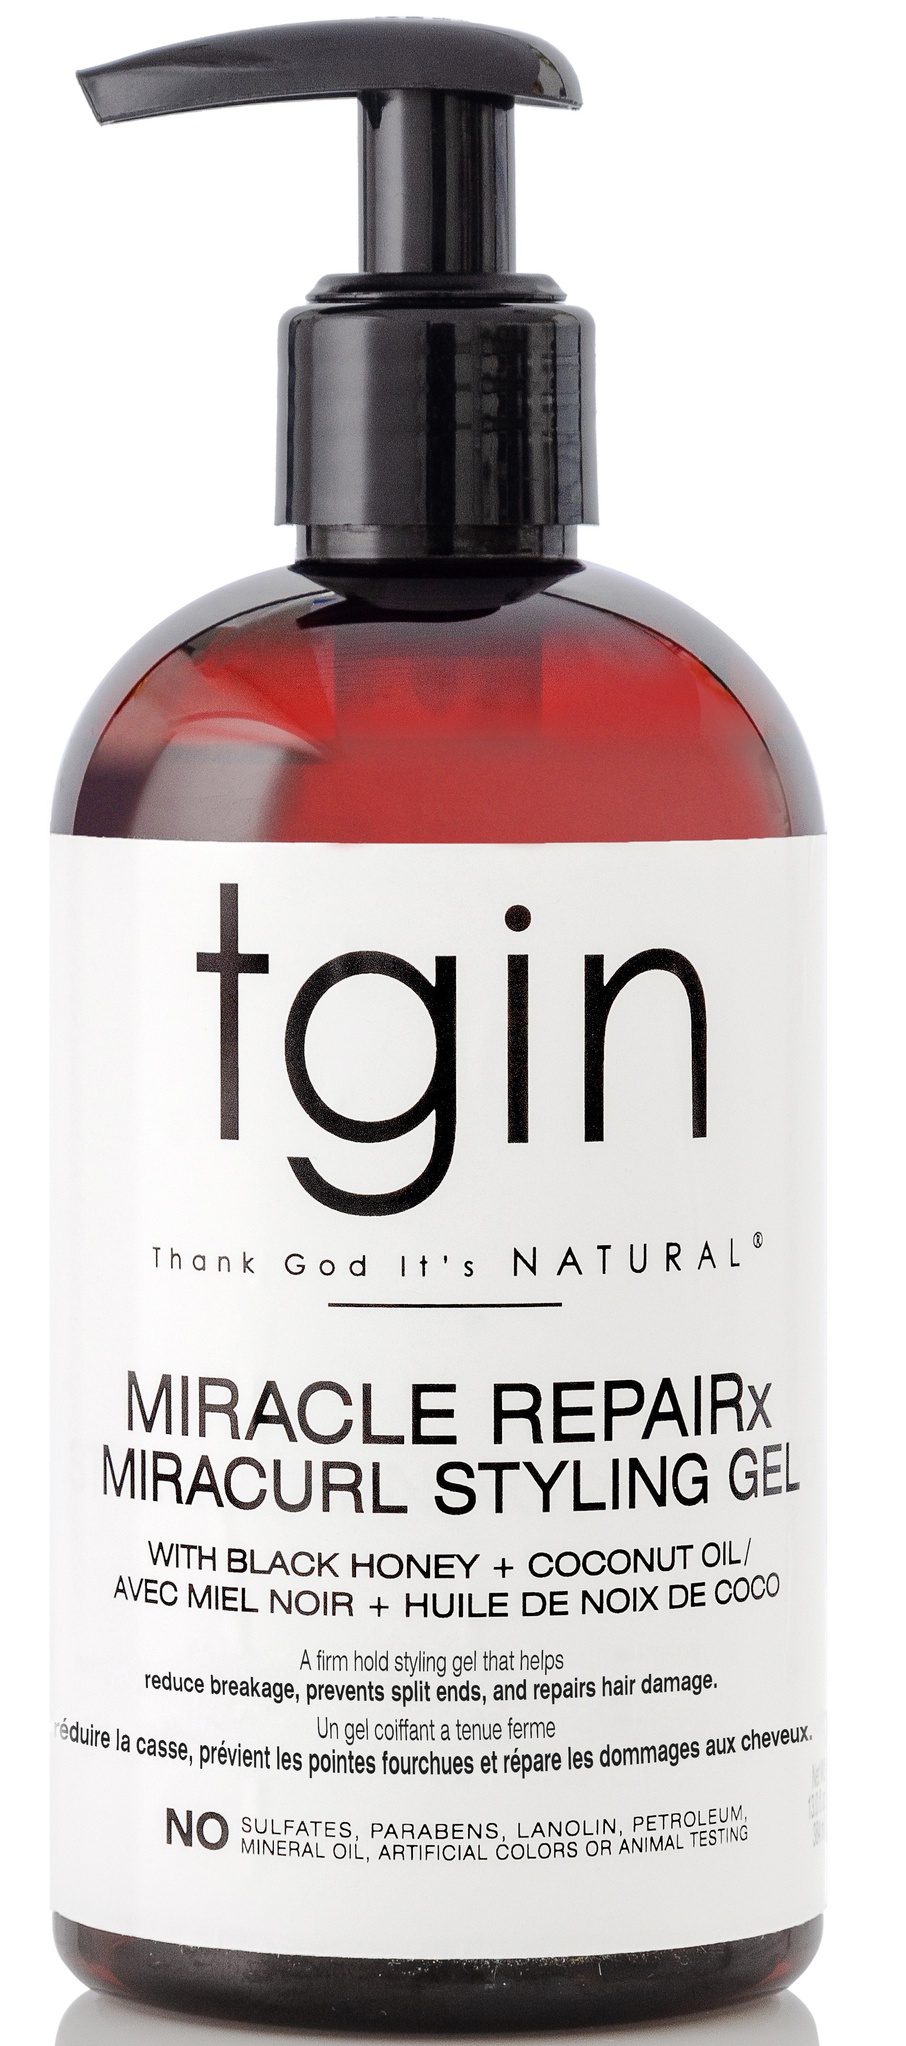 tgin Miracle Repairx Miracurl Styling Gel